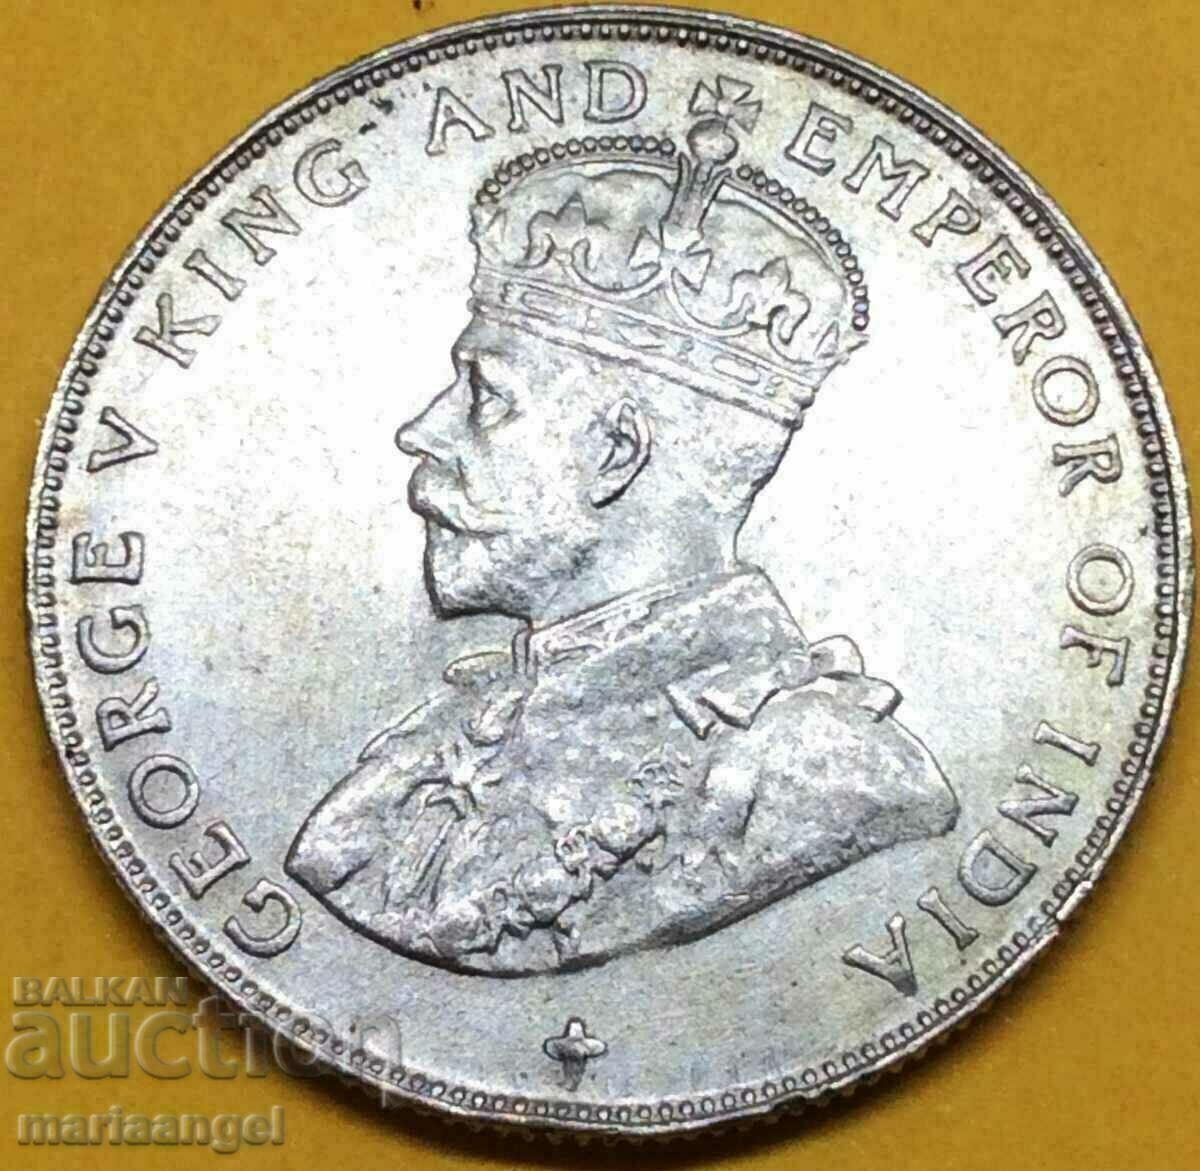 1920 50 Cents 1/2 Dollar Straits Settlements UNC Silver